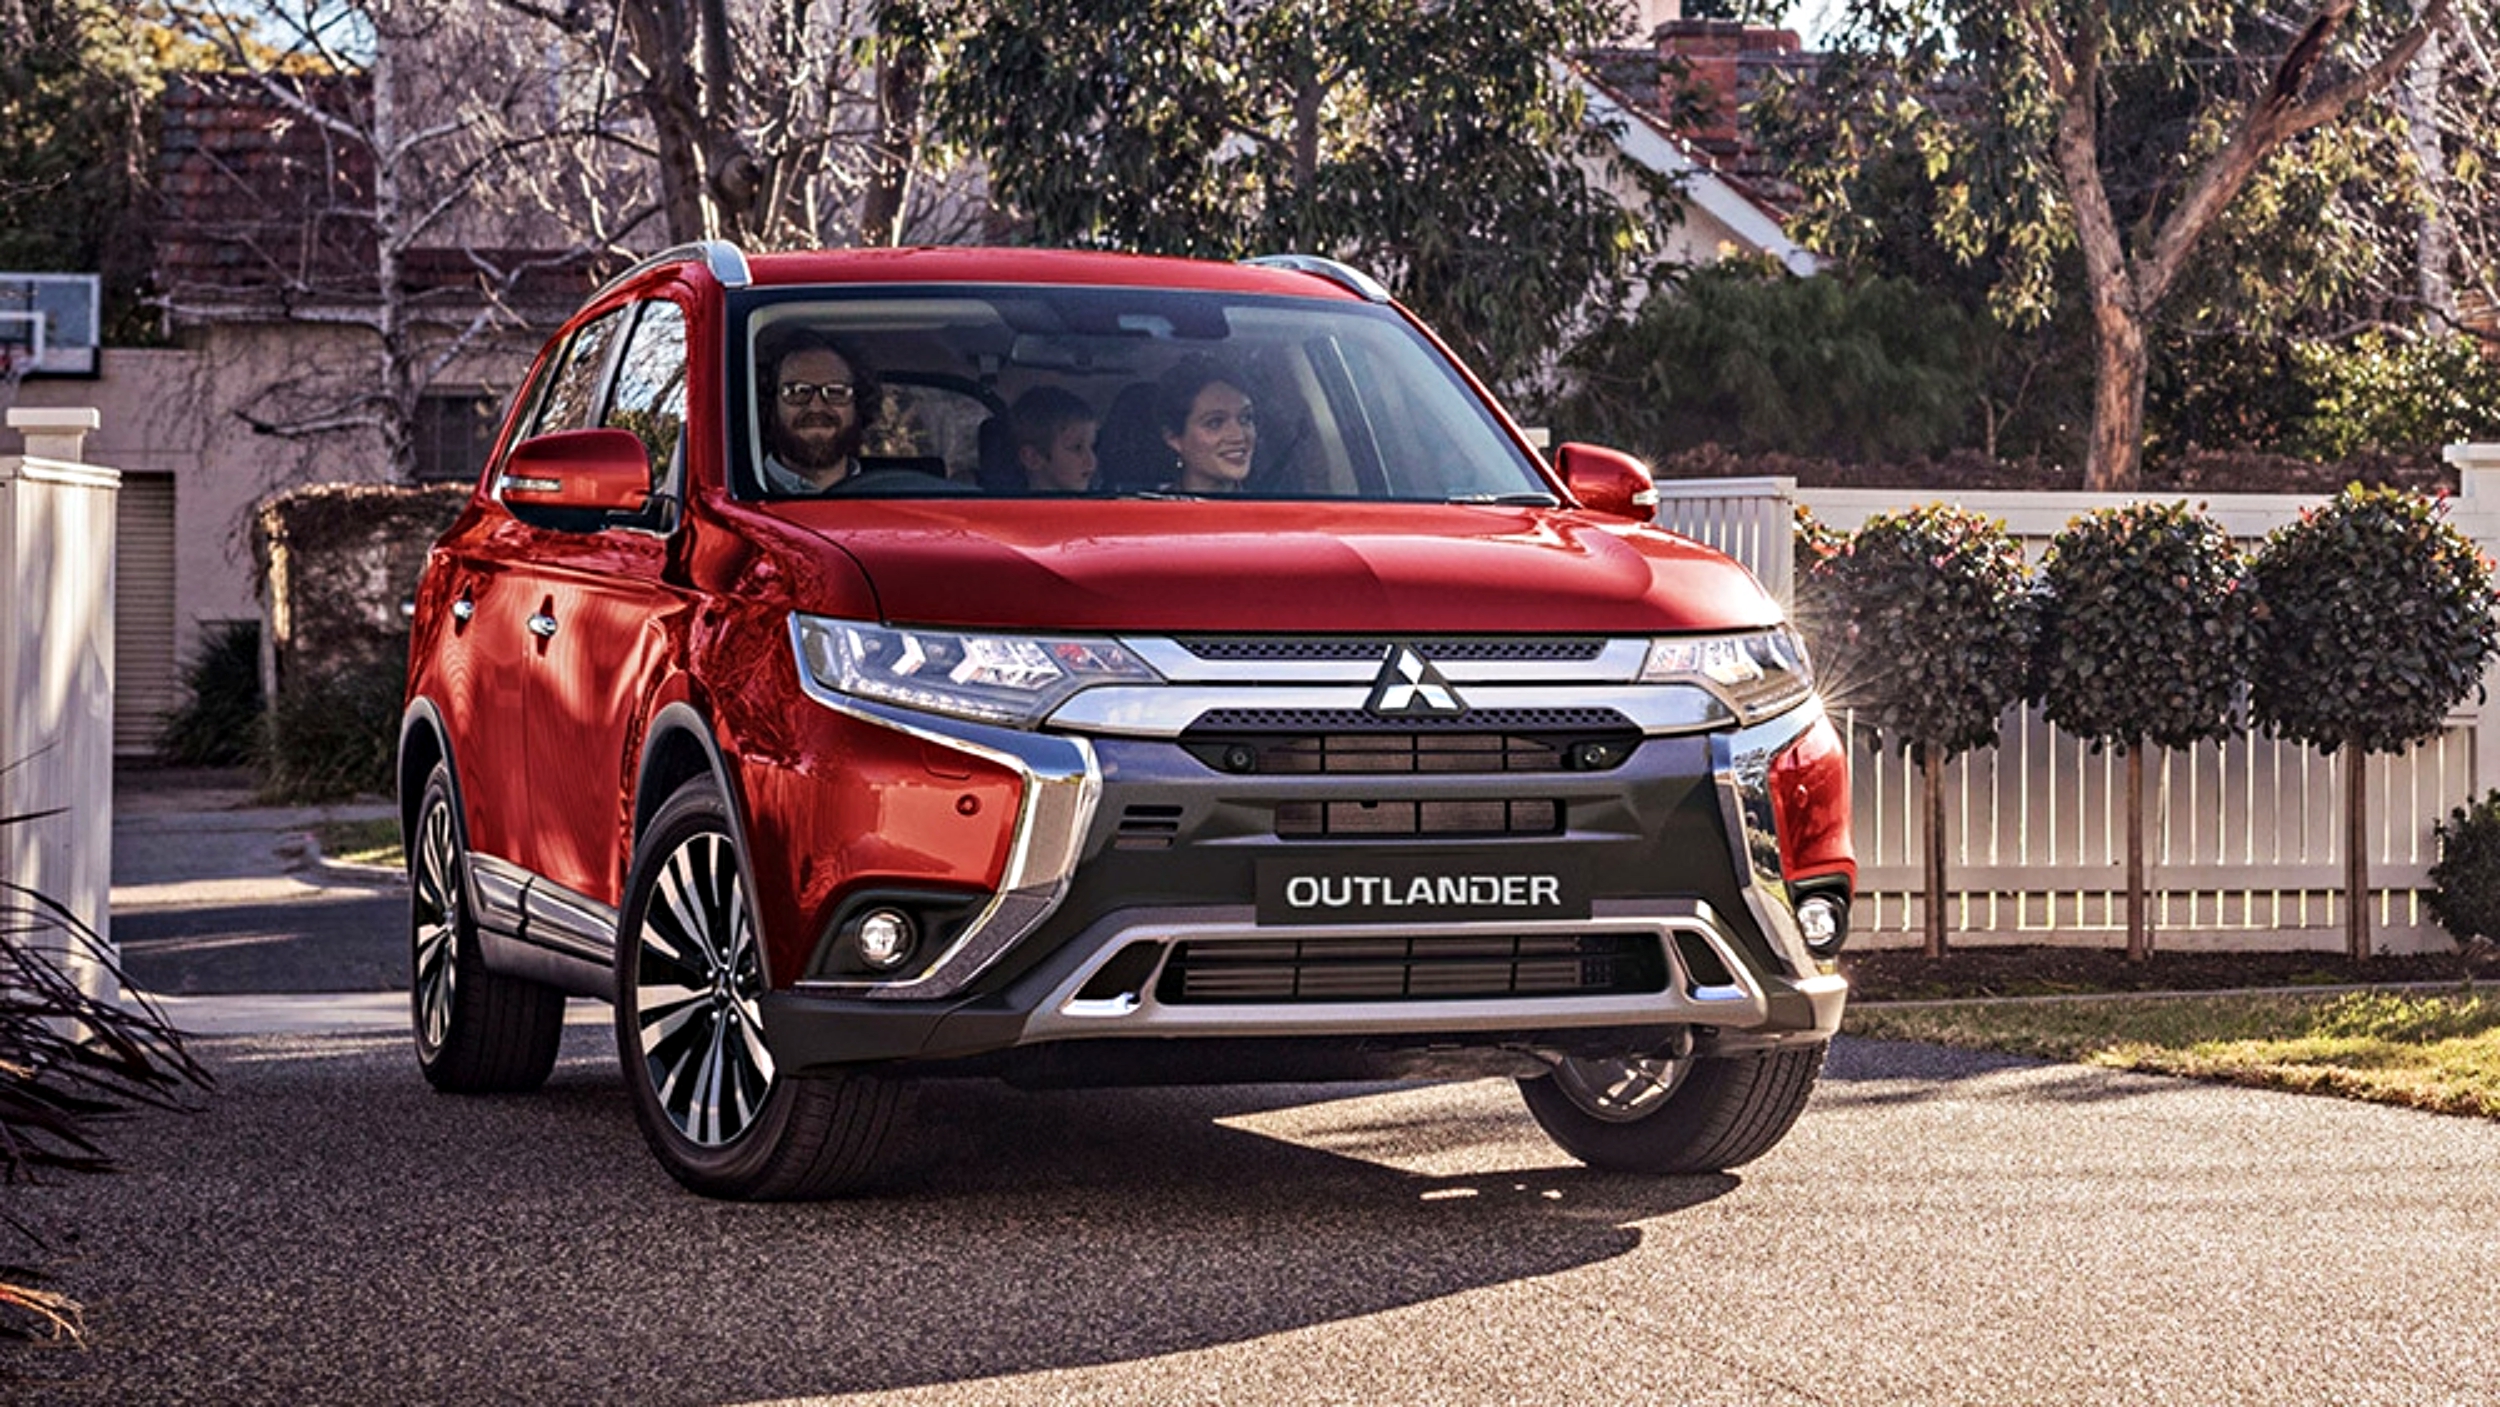 News - 2019 Mitsubishi Outlander Breaks Cover, Looks The Same